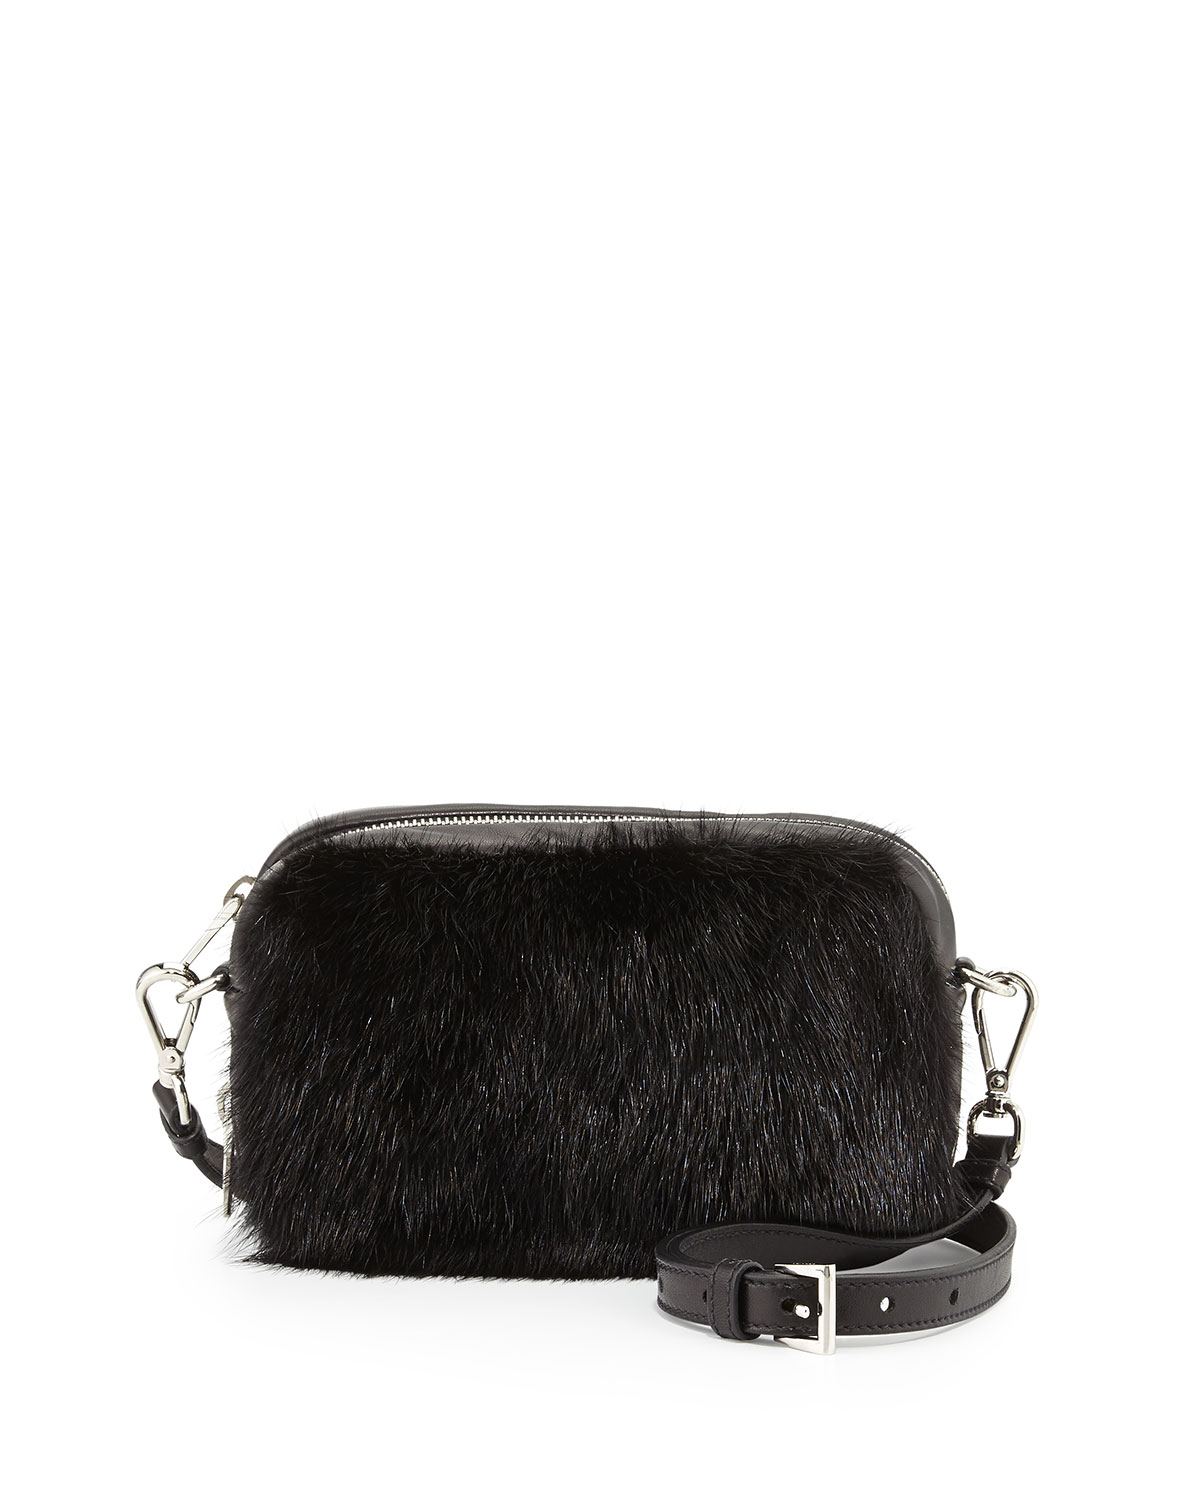 purple prada purse - Prada Nappa Bomber \u0026amp; Mink Fur Belt Bag in Black | Lyst